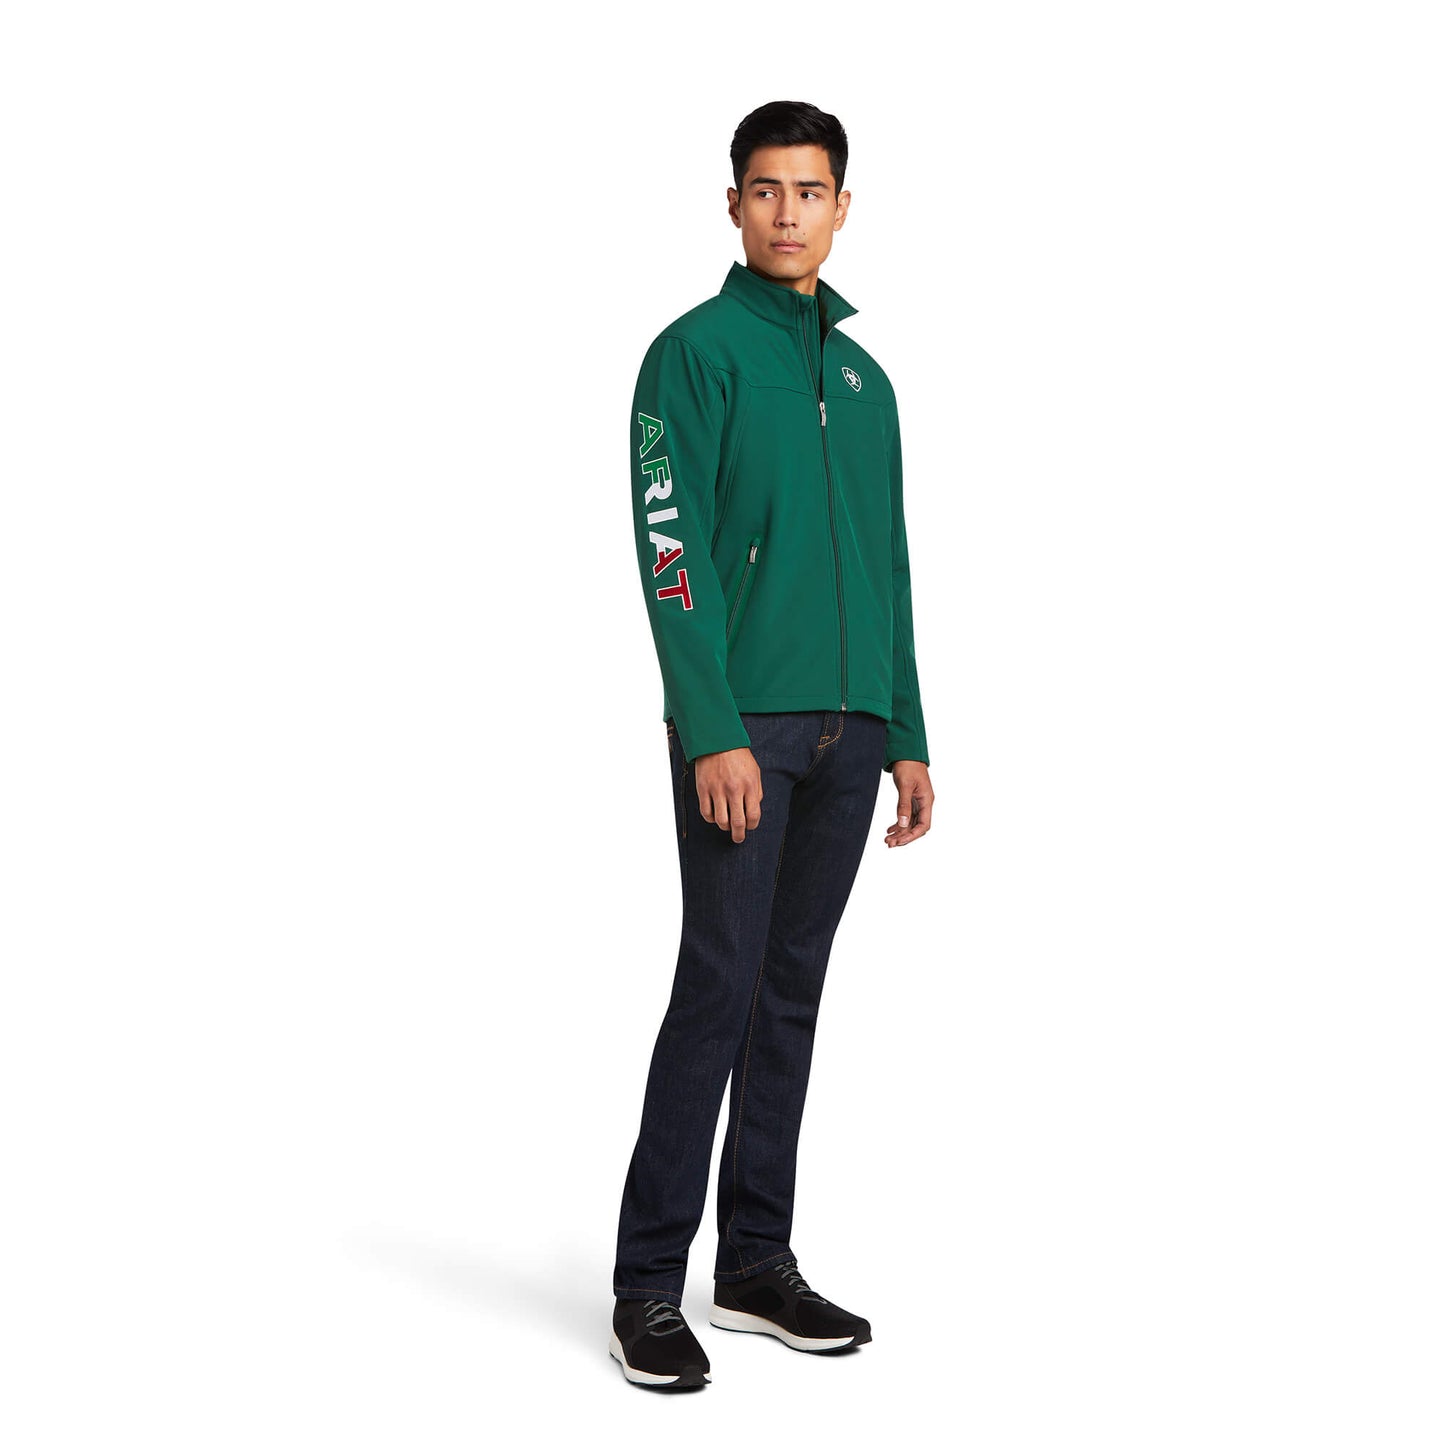 Ariat Mexico Flag Team Softshell Jacket - Green